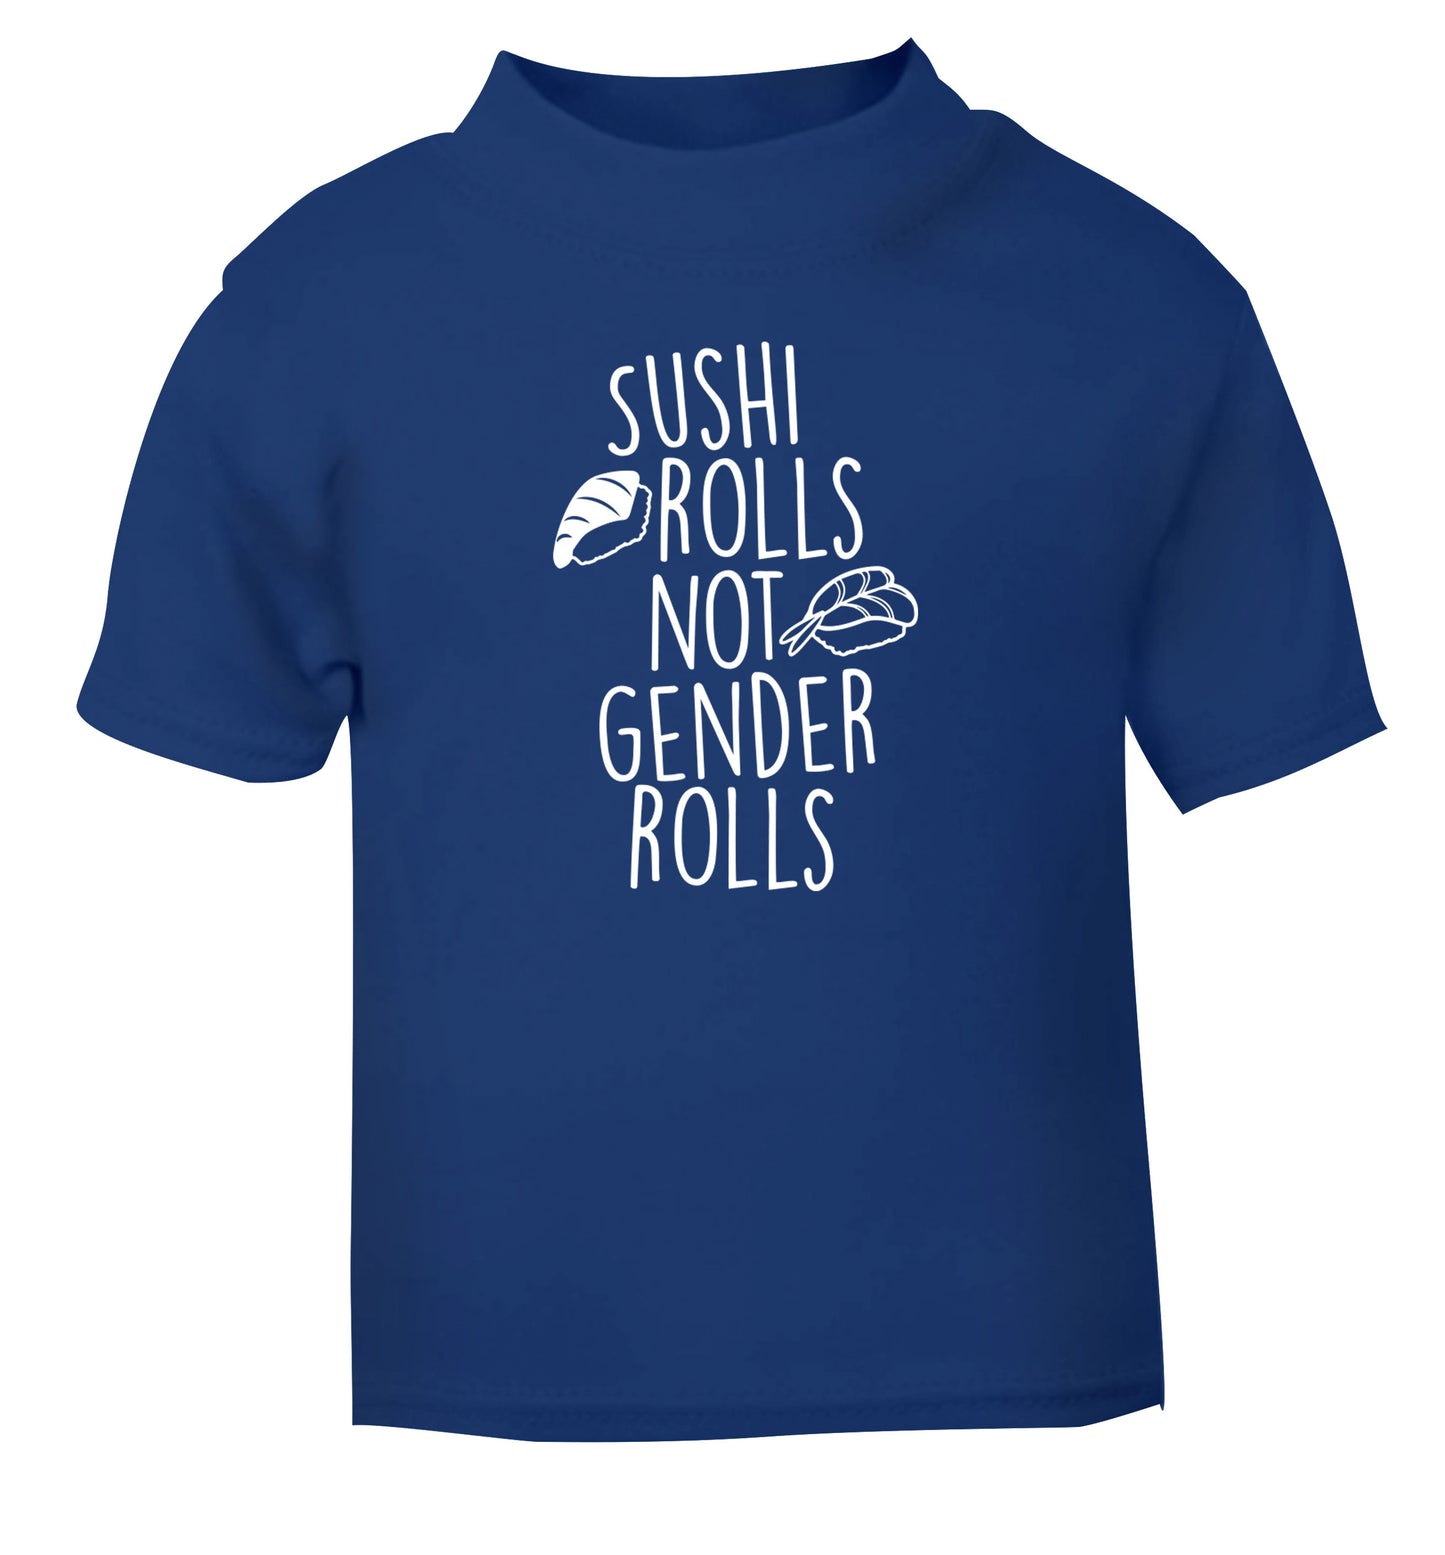 Sushi rolls not gender rolls blue Baby Toddler Tshirt 2 Years